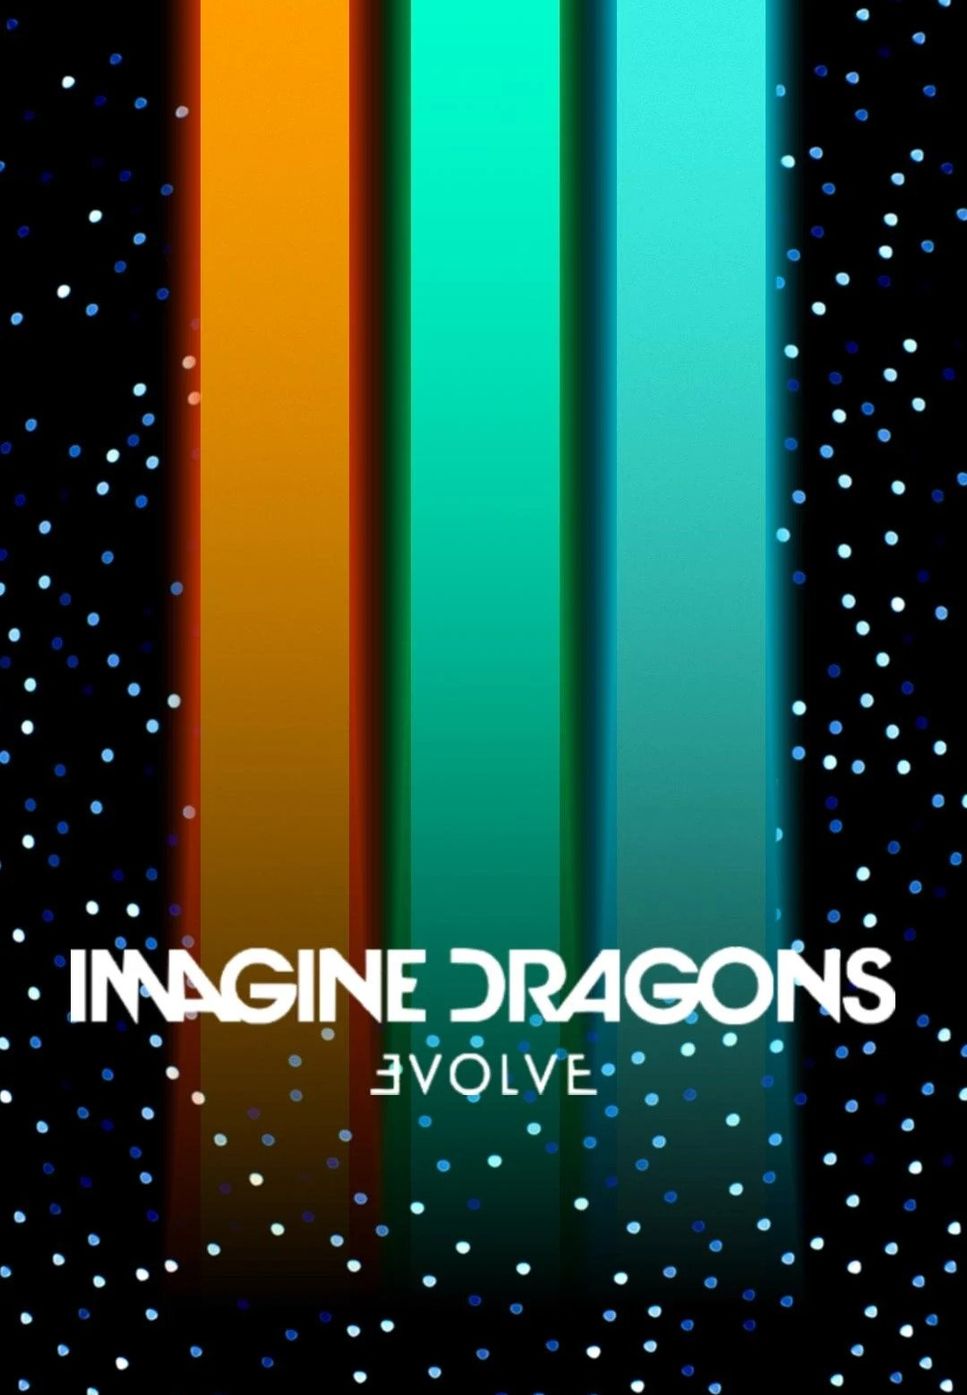 Imagine Dragons - Believer by PianoFreaks